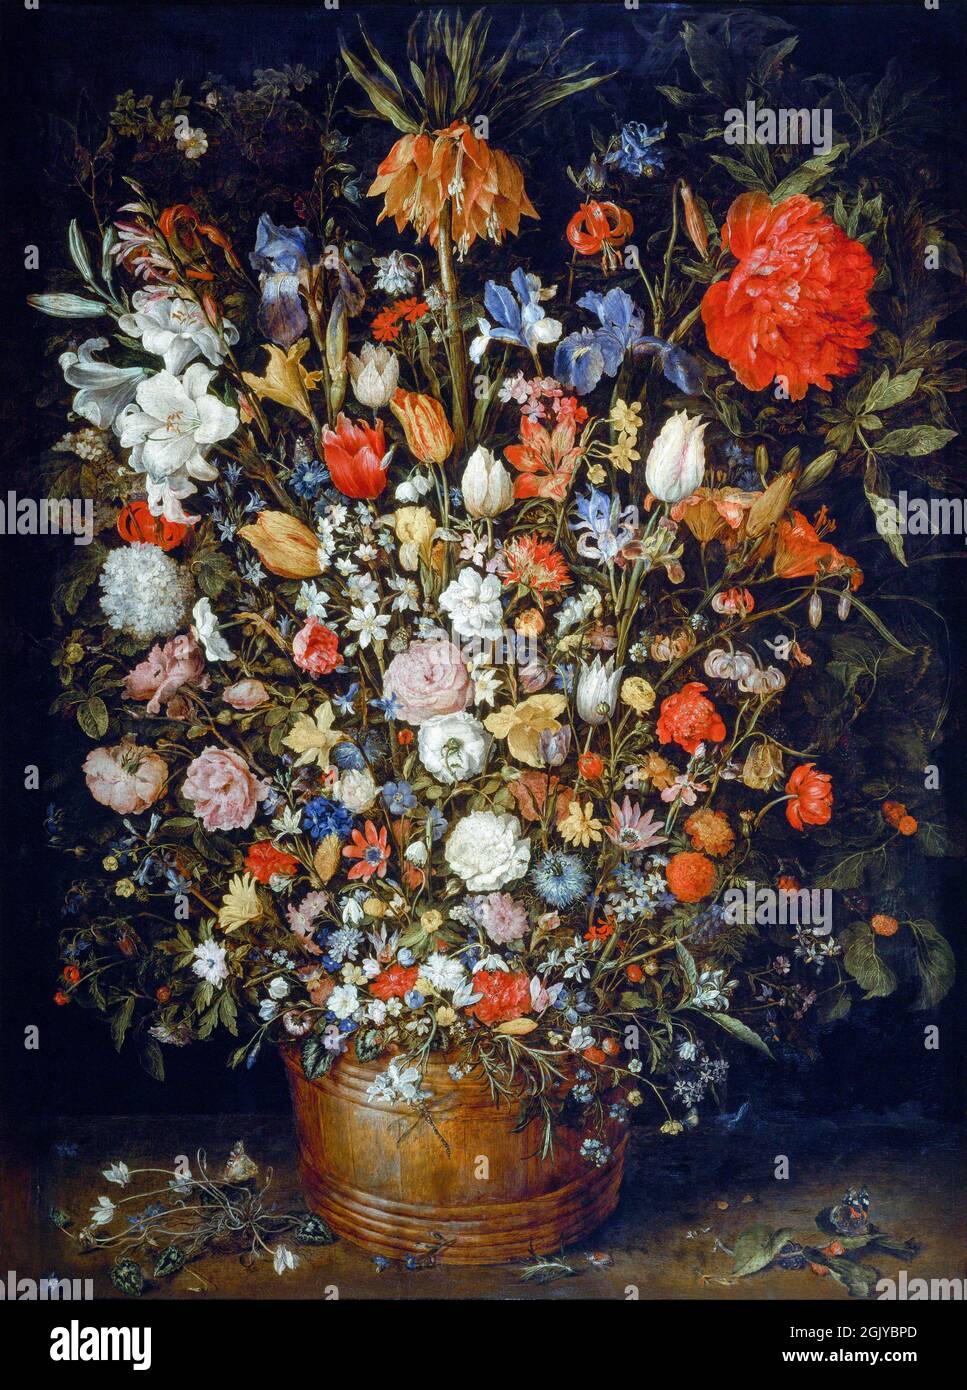 Jan Brueghel the Elder - 1568-1625 - Large Flower Bouquet in Wooden Vase, 1606-1607; oil on wood, Art History Museum, Vienna, Austria Stock Photo